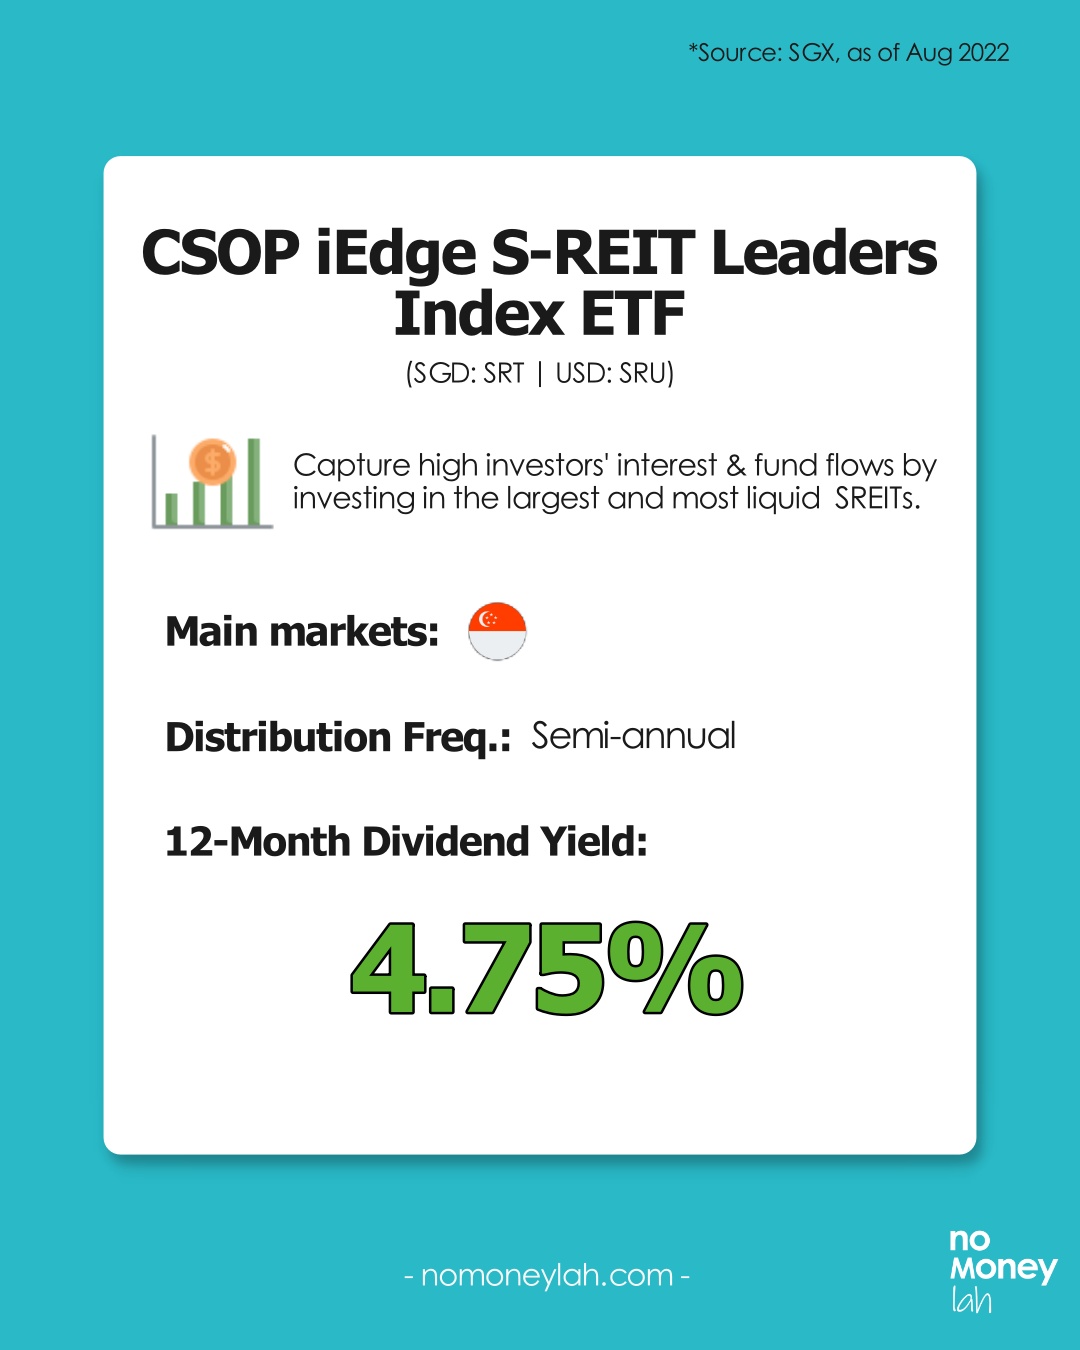 CSOP iEdge S-REIT Leaders Index ETF Overview (Source: SGX)